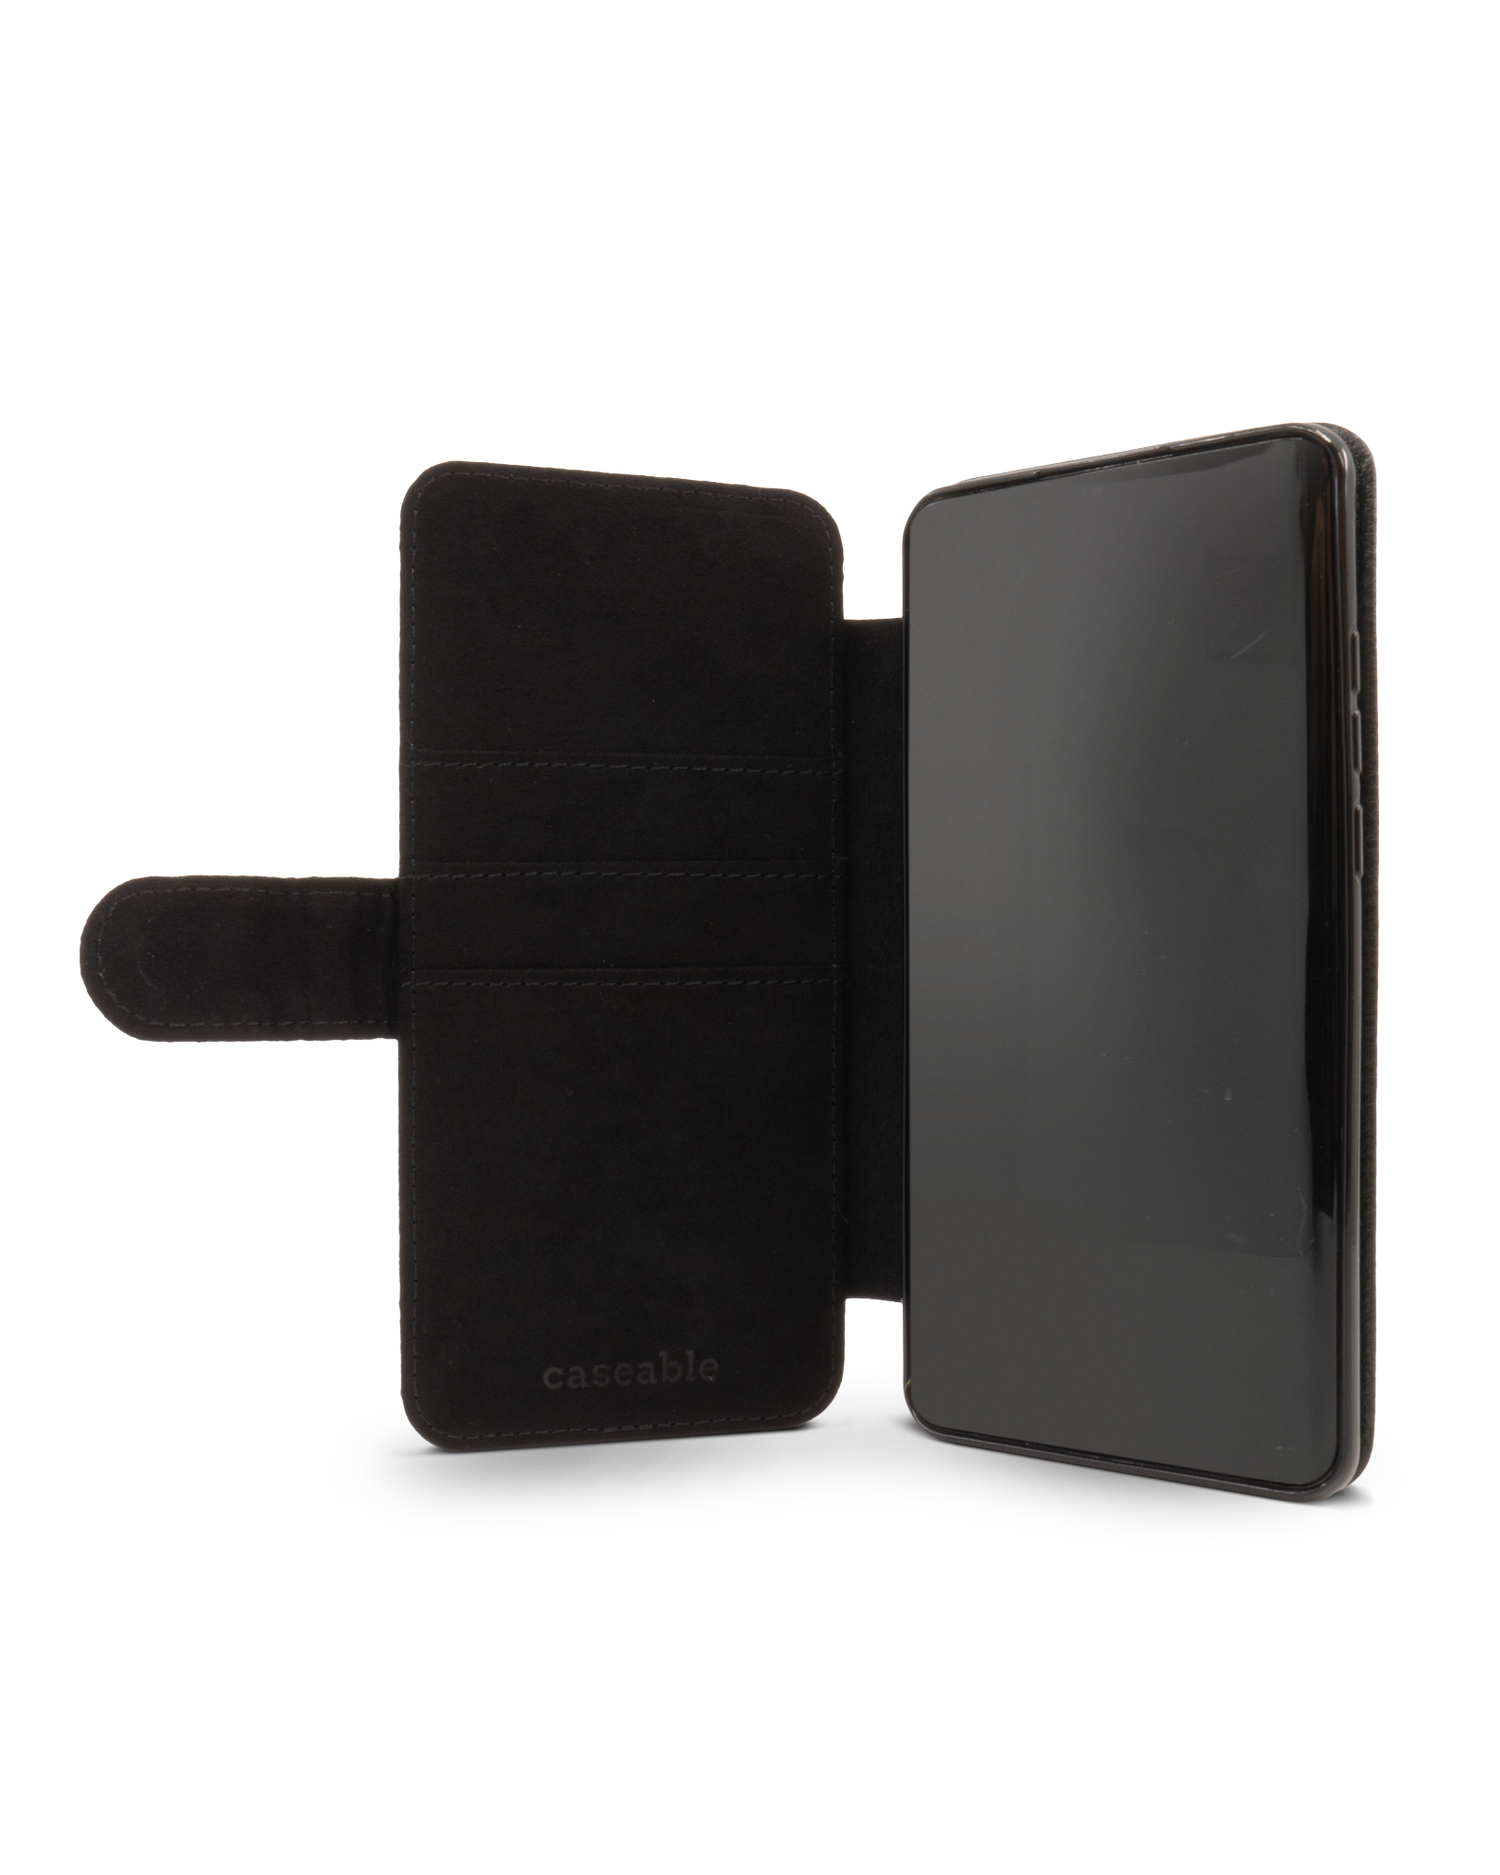 Metric Sunset Wallet Phone Case Huawei P30 Pro: Inside View